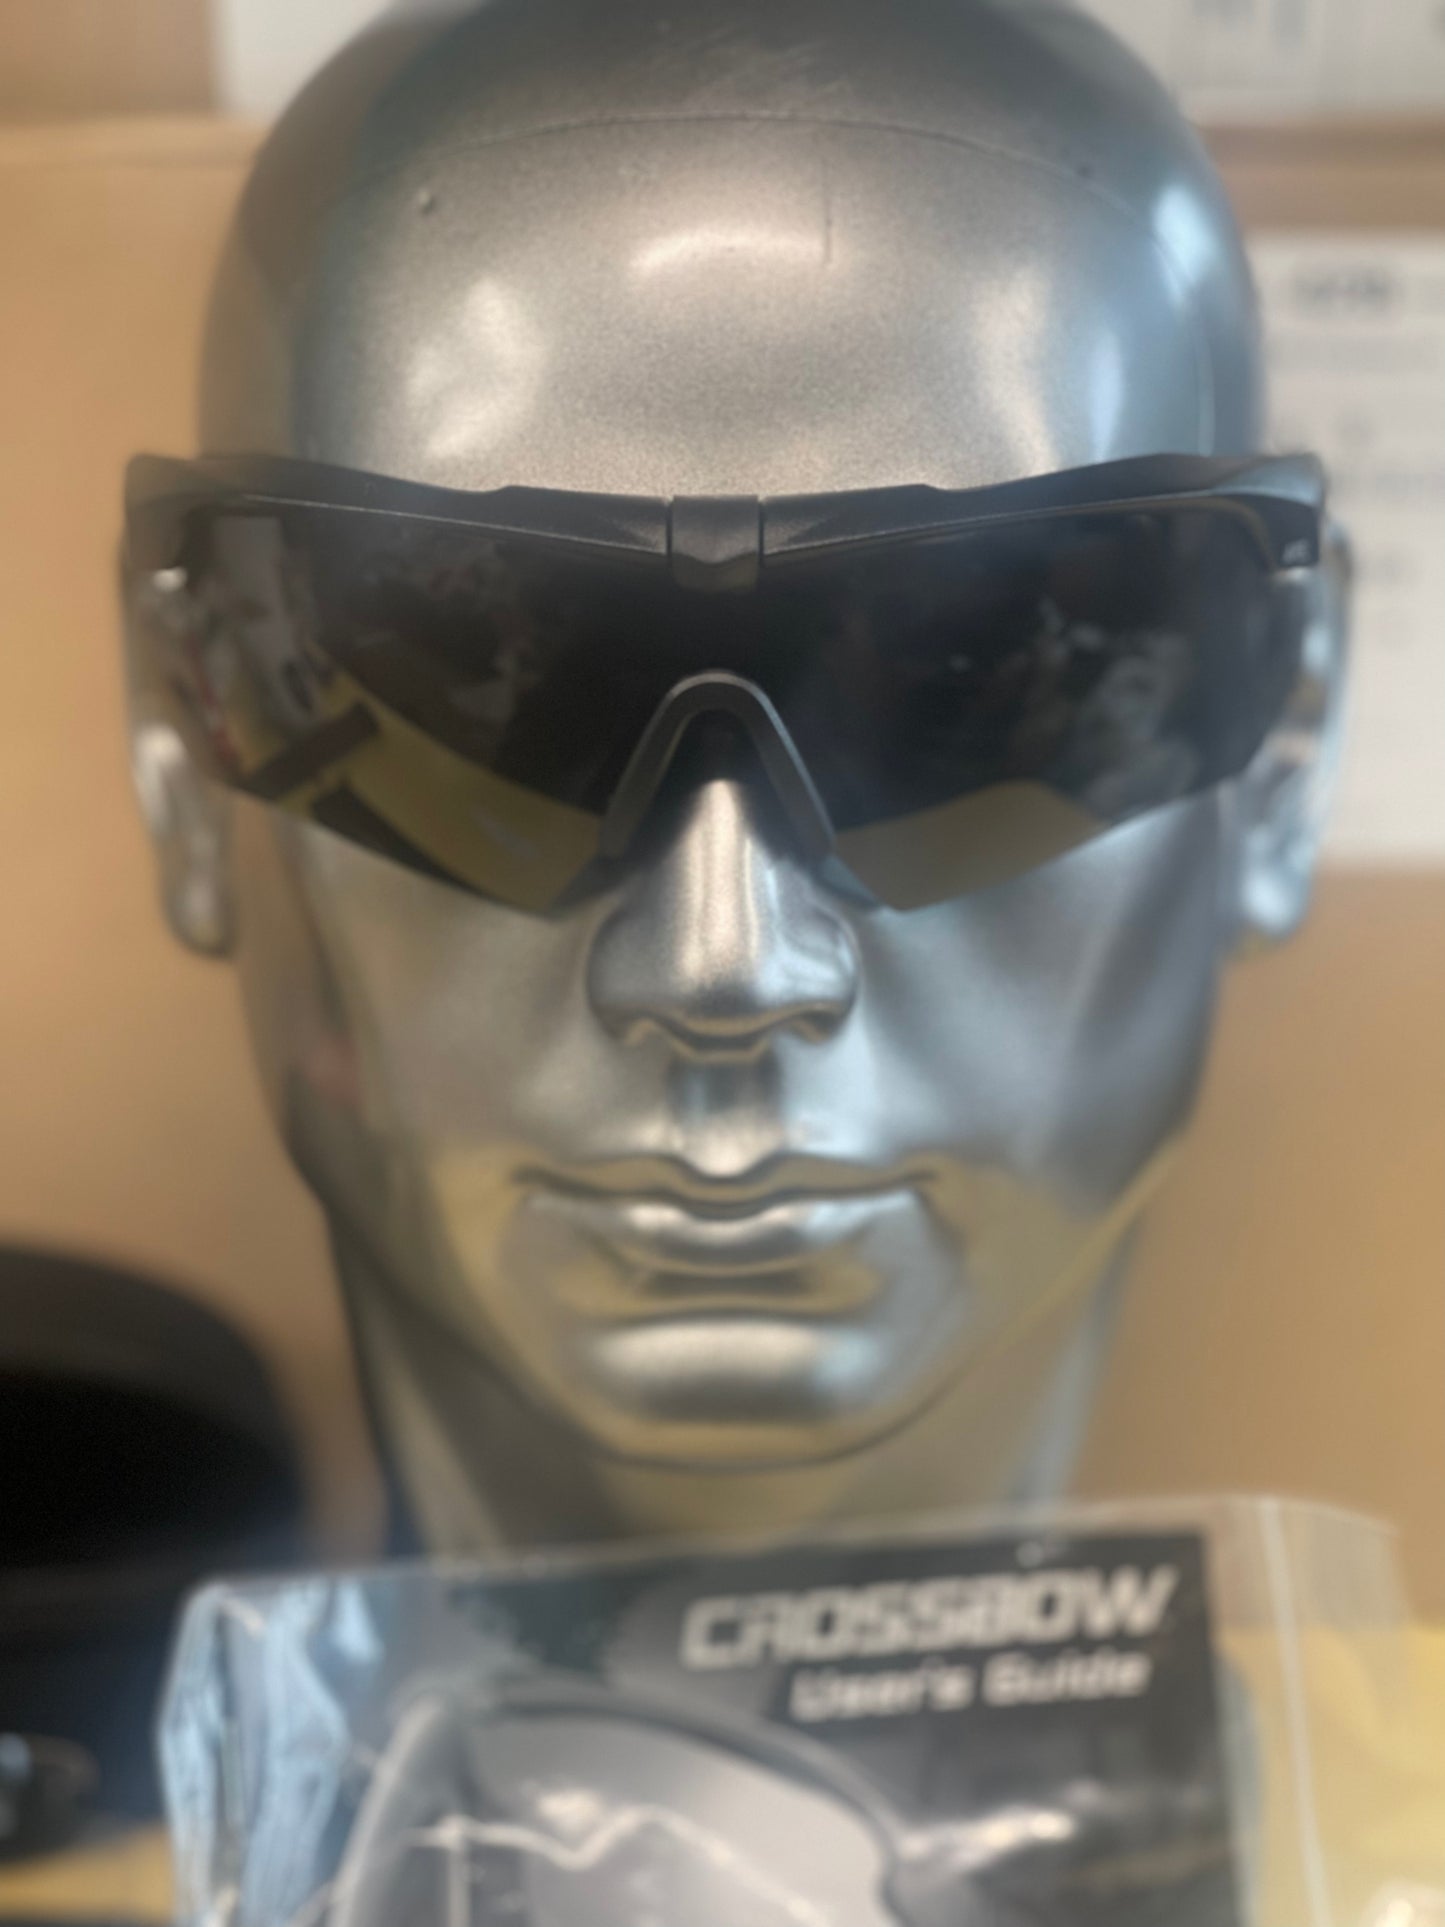 New ESS Crossbow Glasses W/ Clear & Dark Lenses (new)